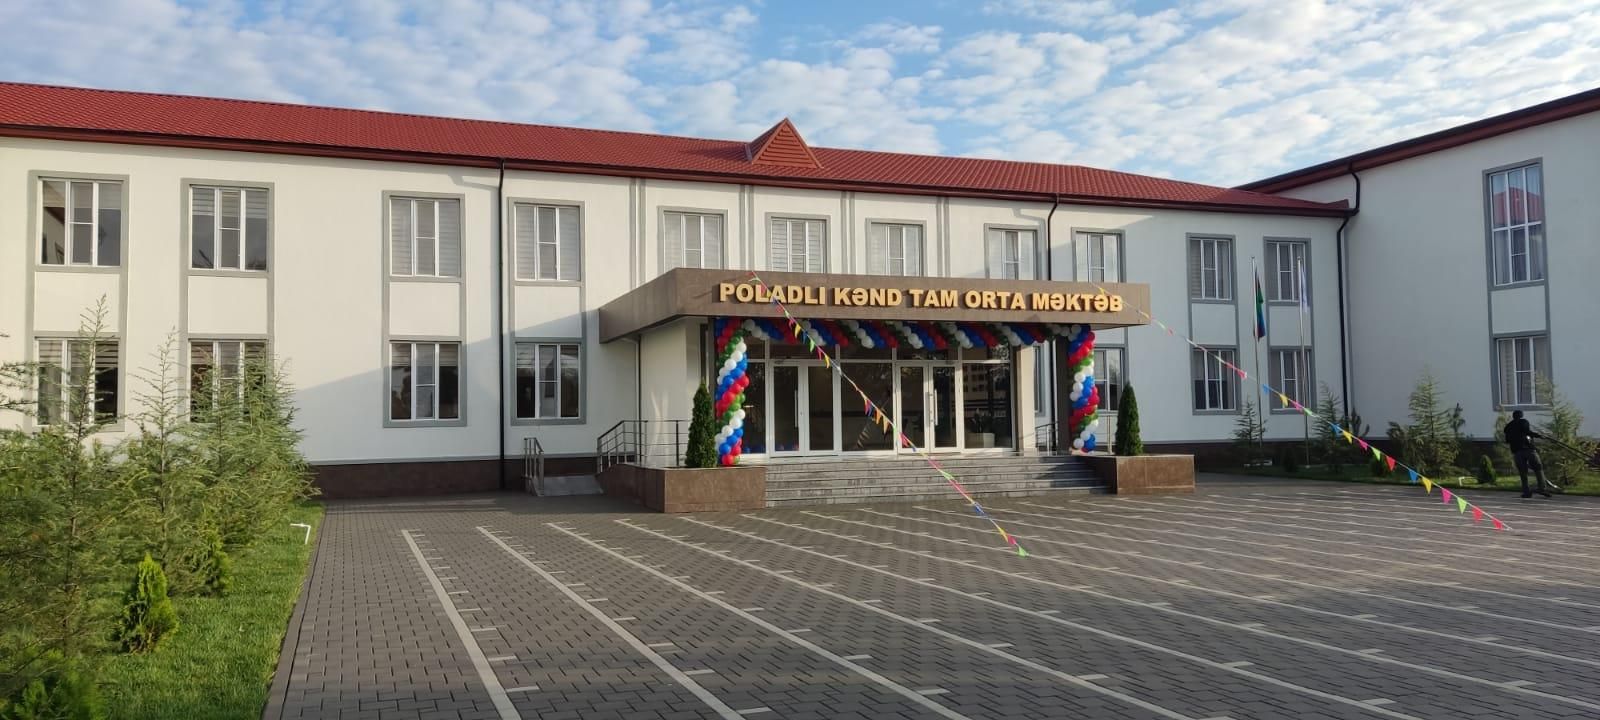 New building for school in Poladli is operational due to Heydar Aliyev Foundation [PHOTOS]